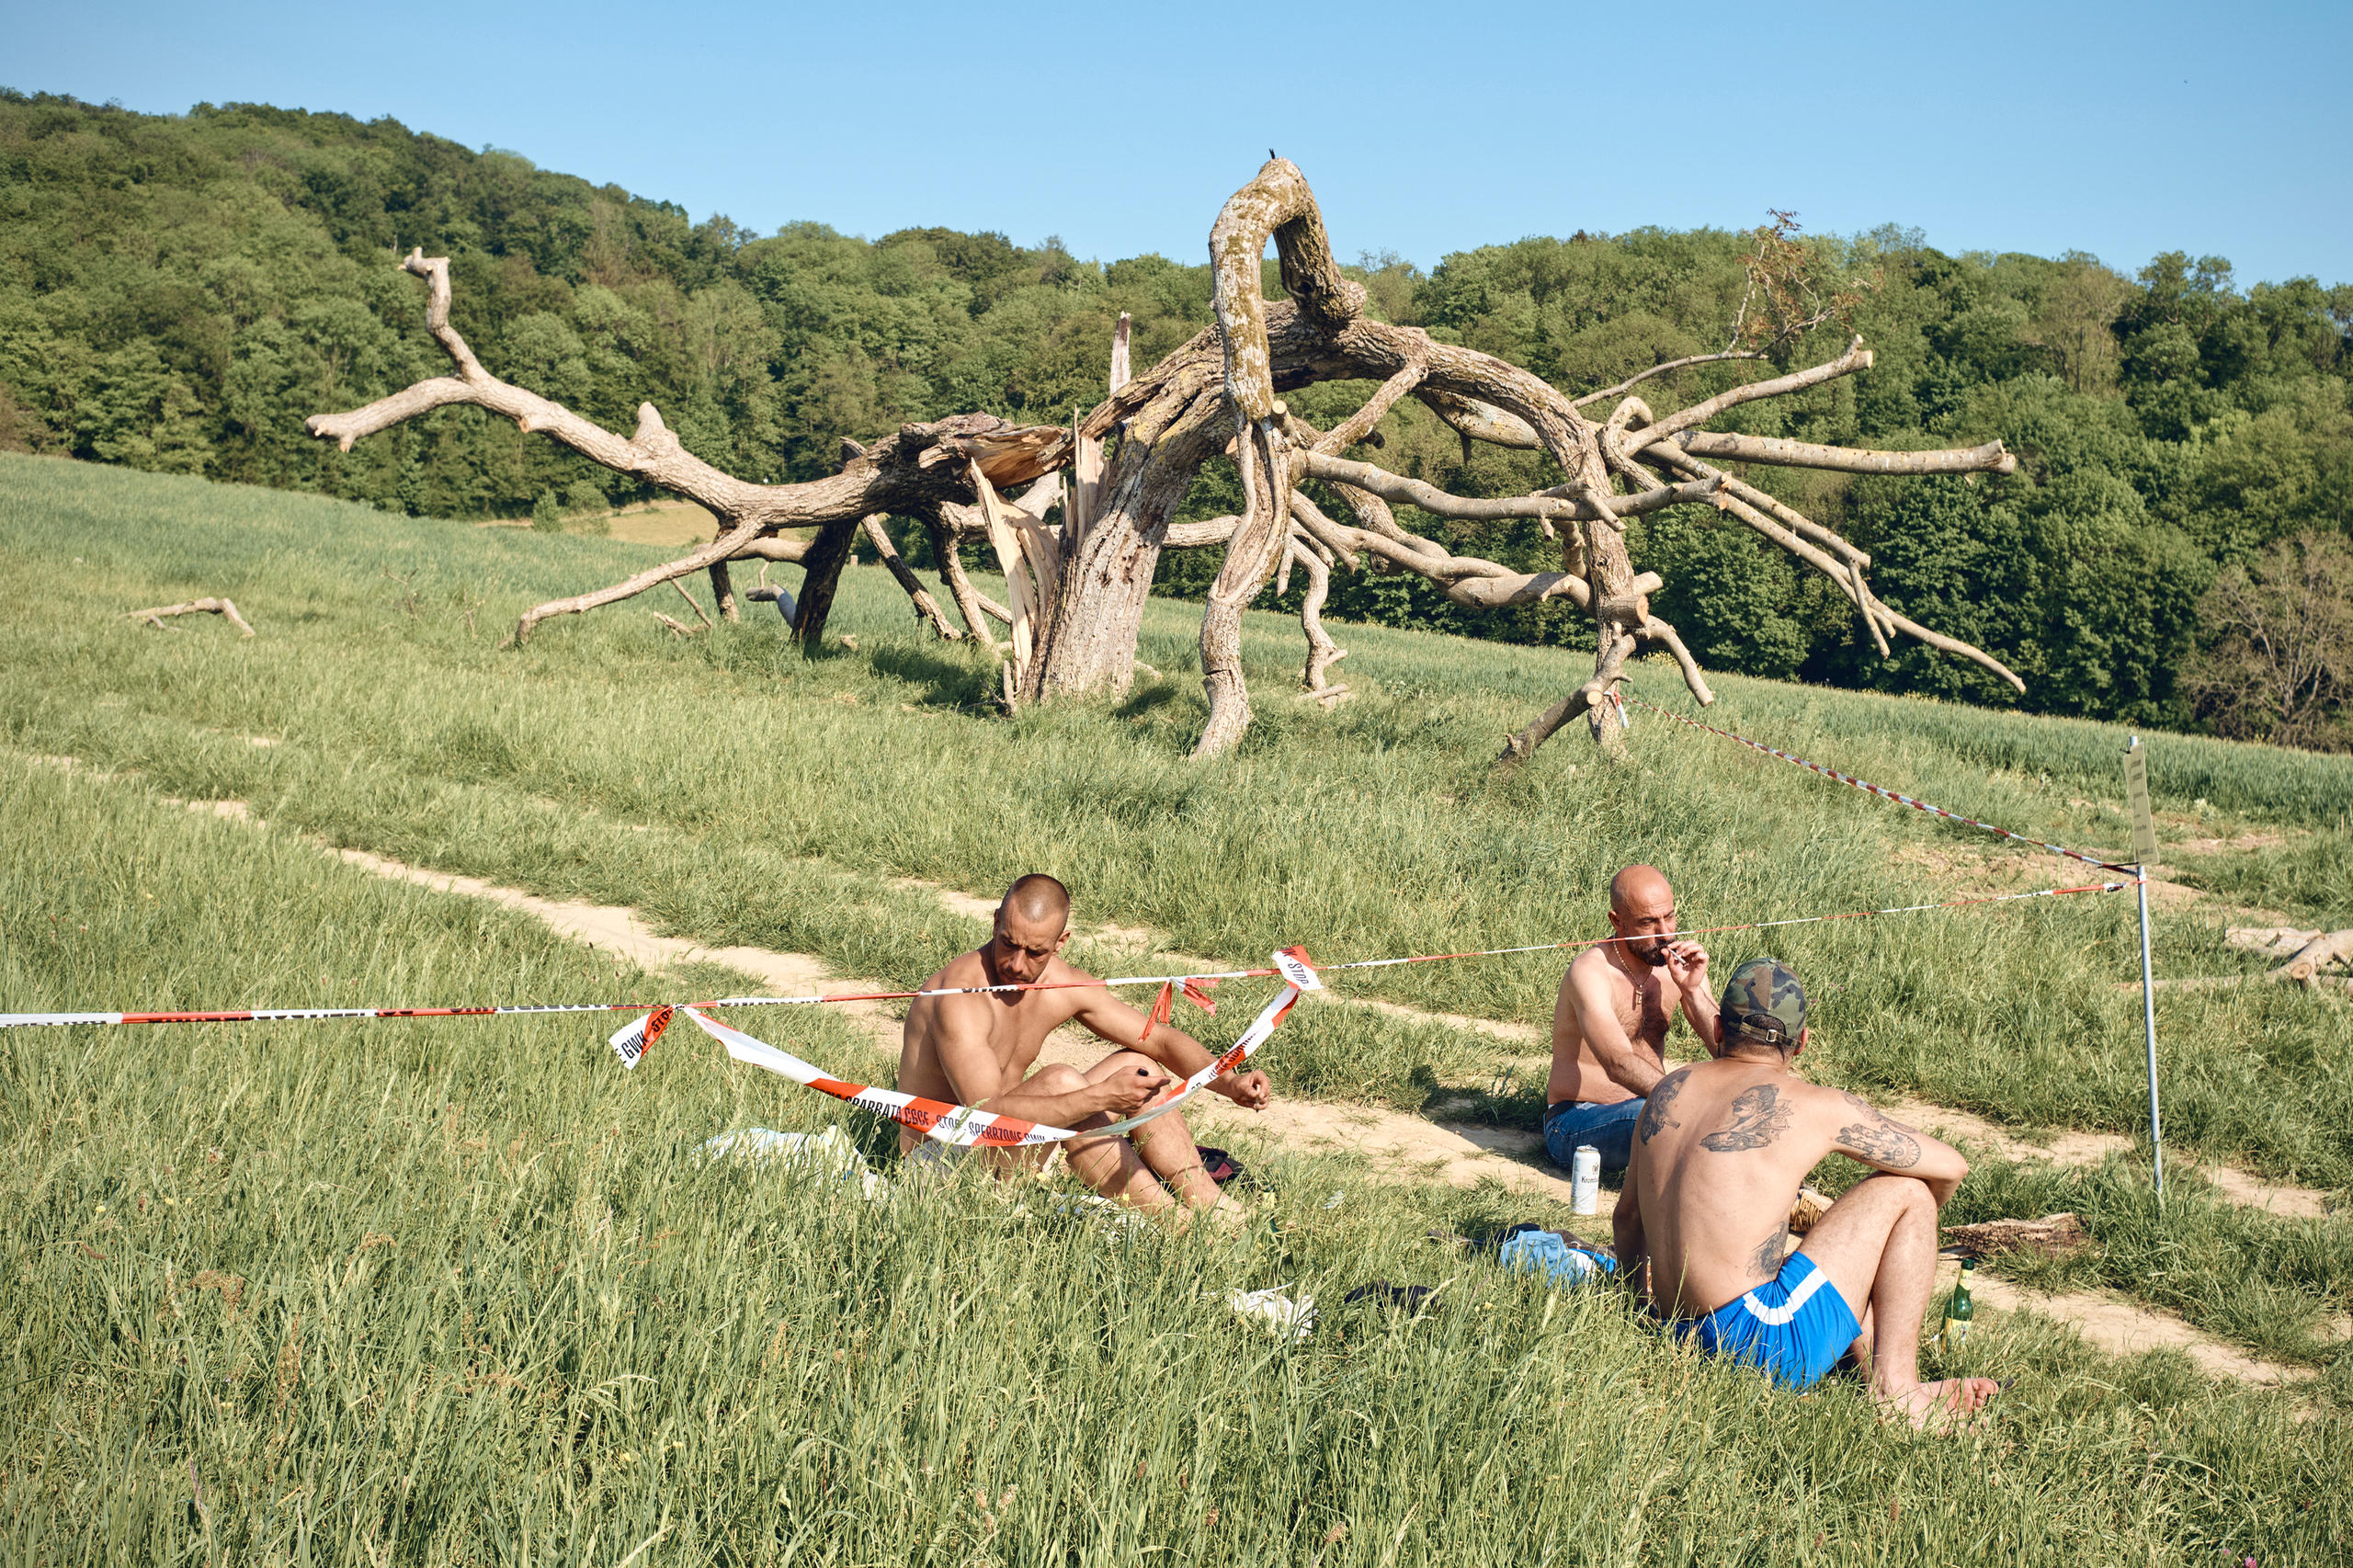 мужчины с голым торсом сидят на траве